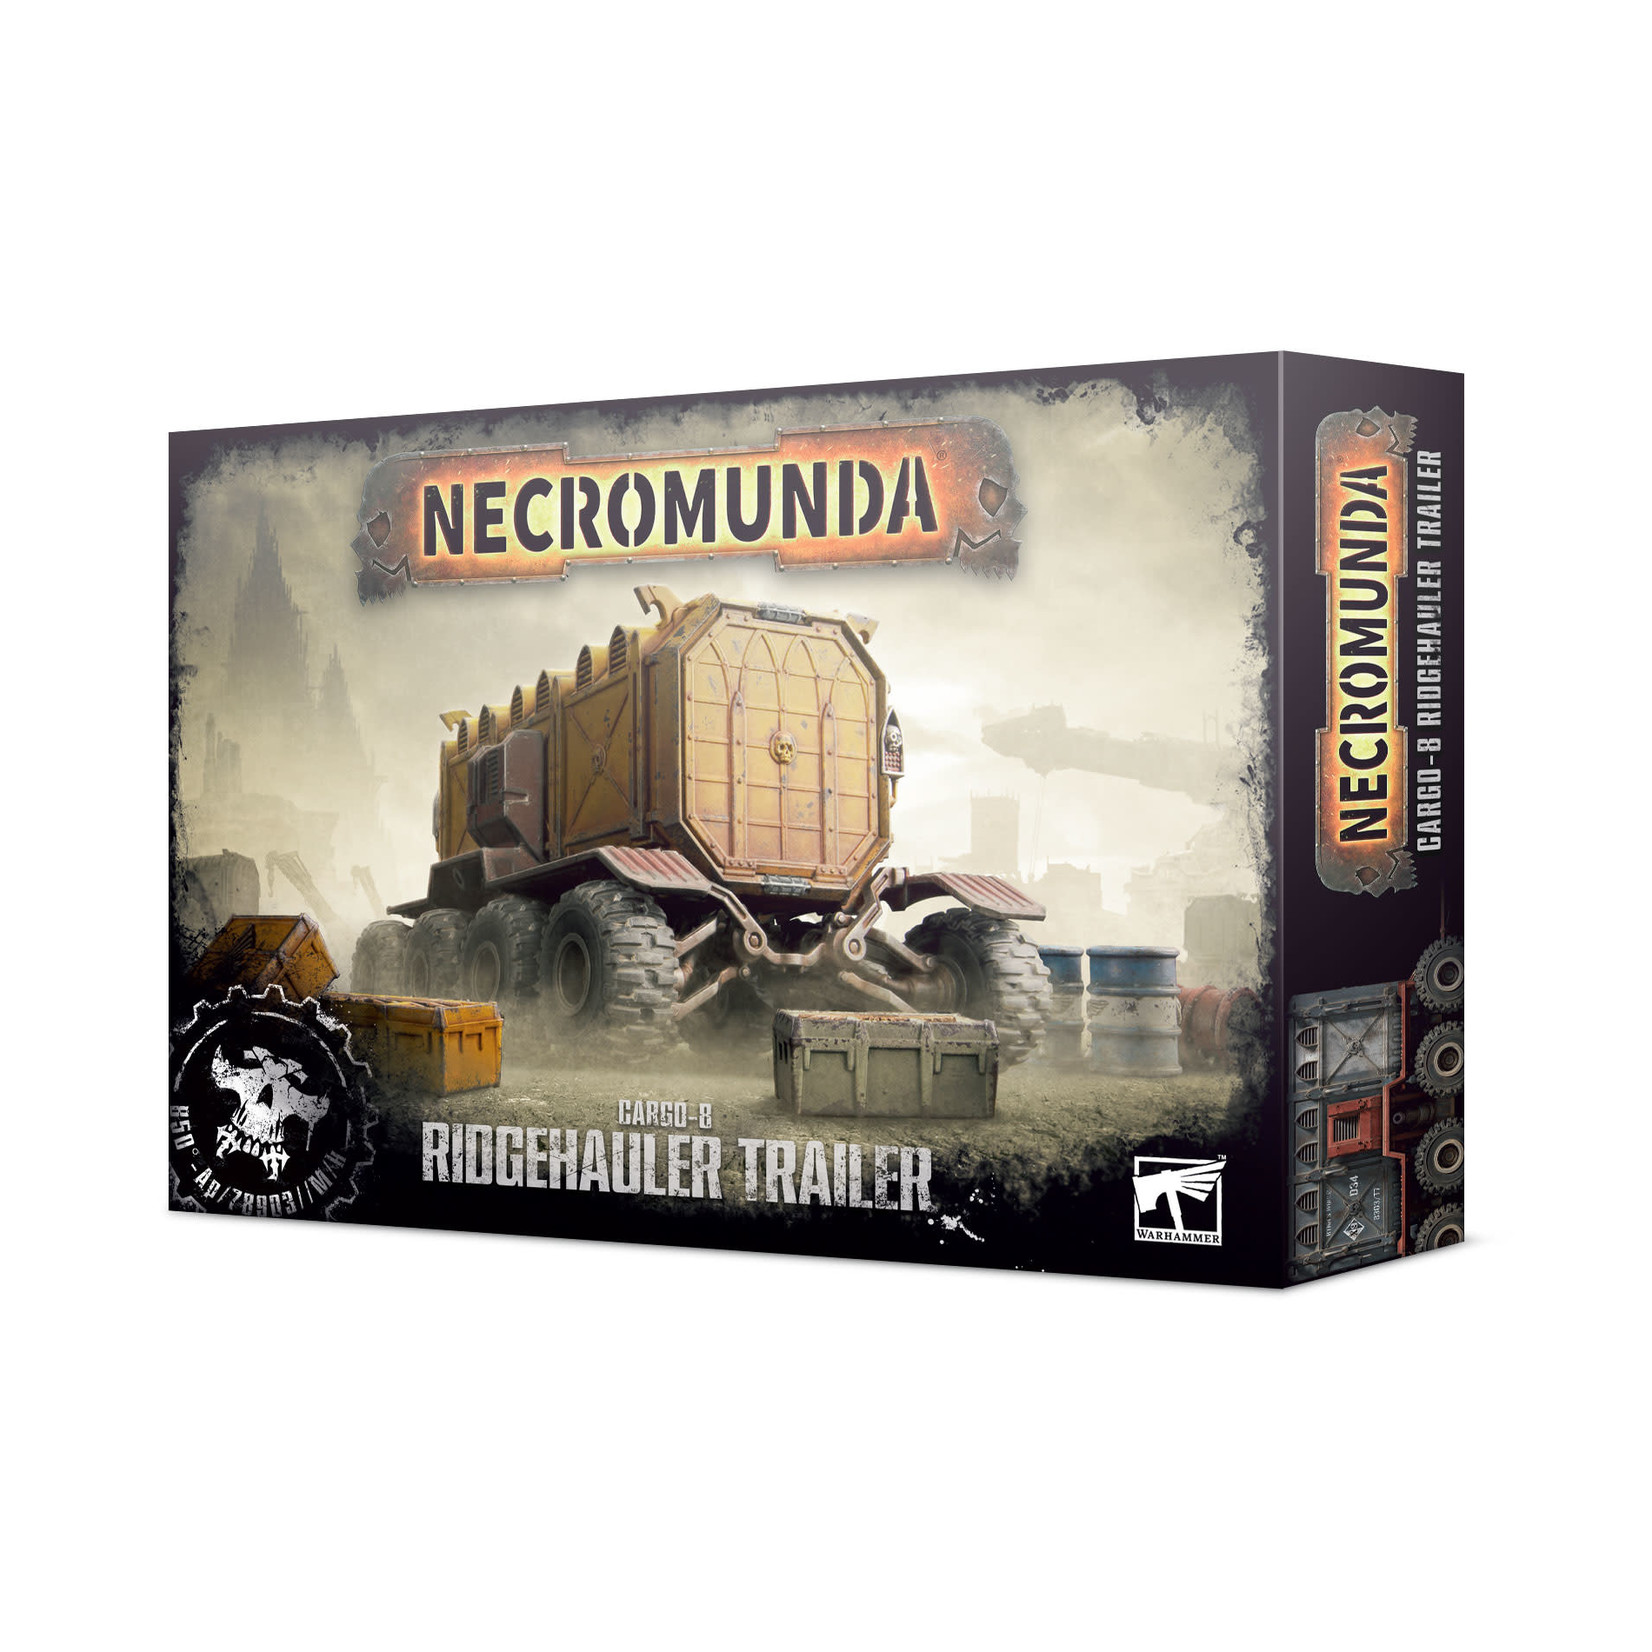 Games Workshop Necromunda: Cargo-8 Ridgehauler Trailer